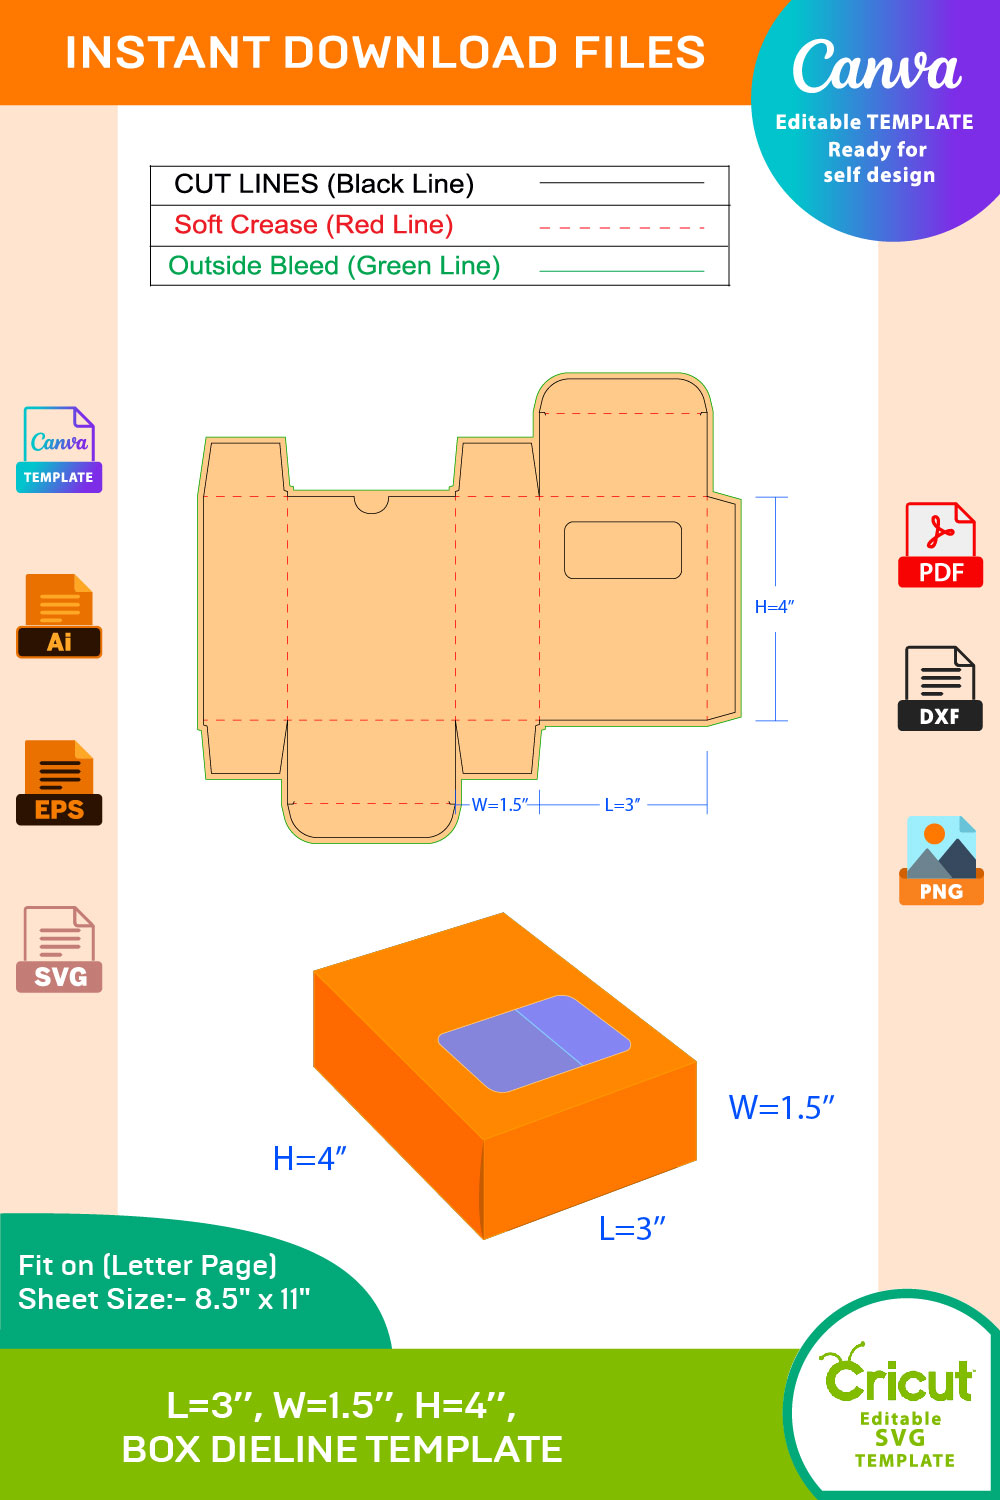 Soap Box Window Dieline Template Ai, EPS, PDF, DXF, SVG, PNG, JPG File pinterest preview image.